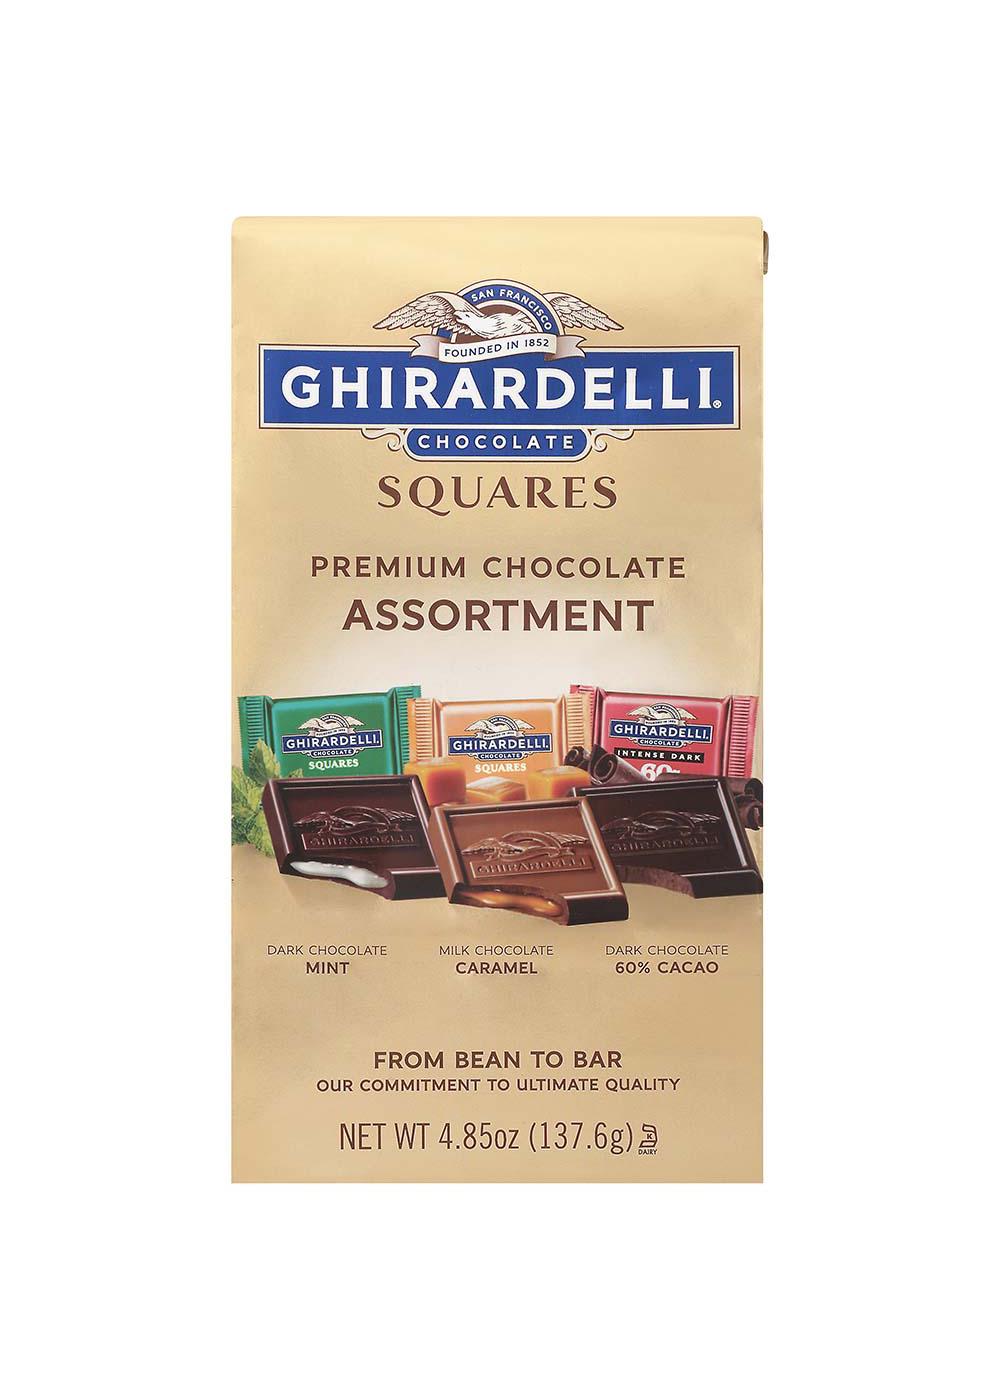 Ghirardelli Premium Chocolate Assortment Squares Shop Candy At H E B